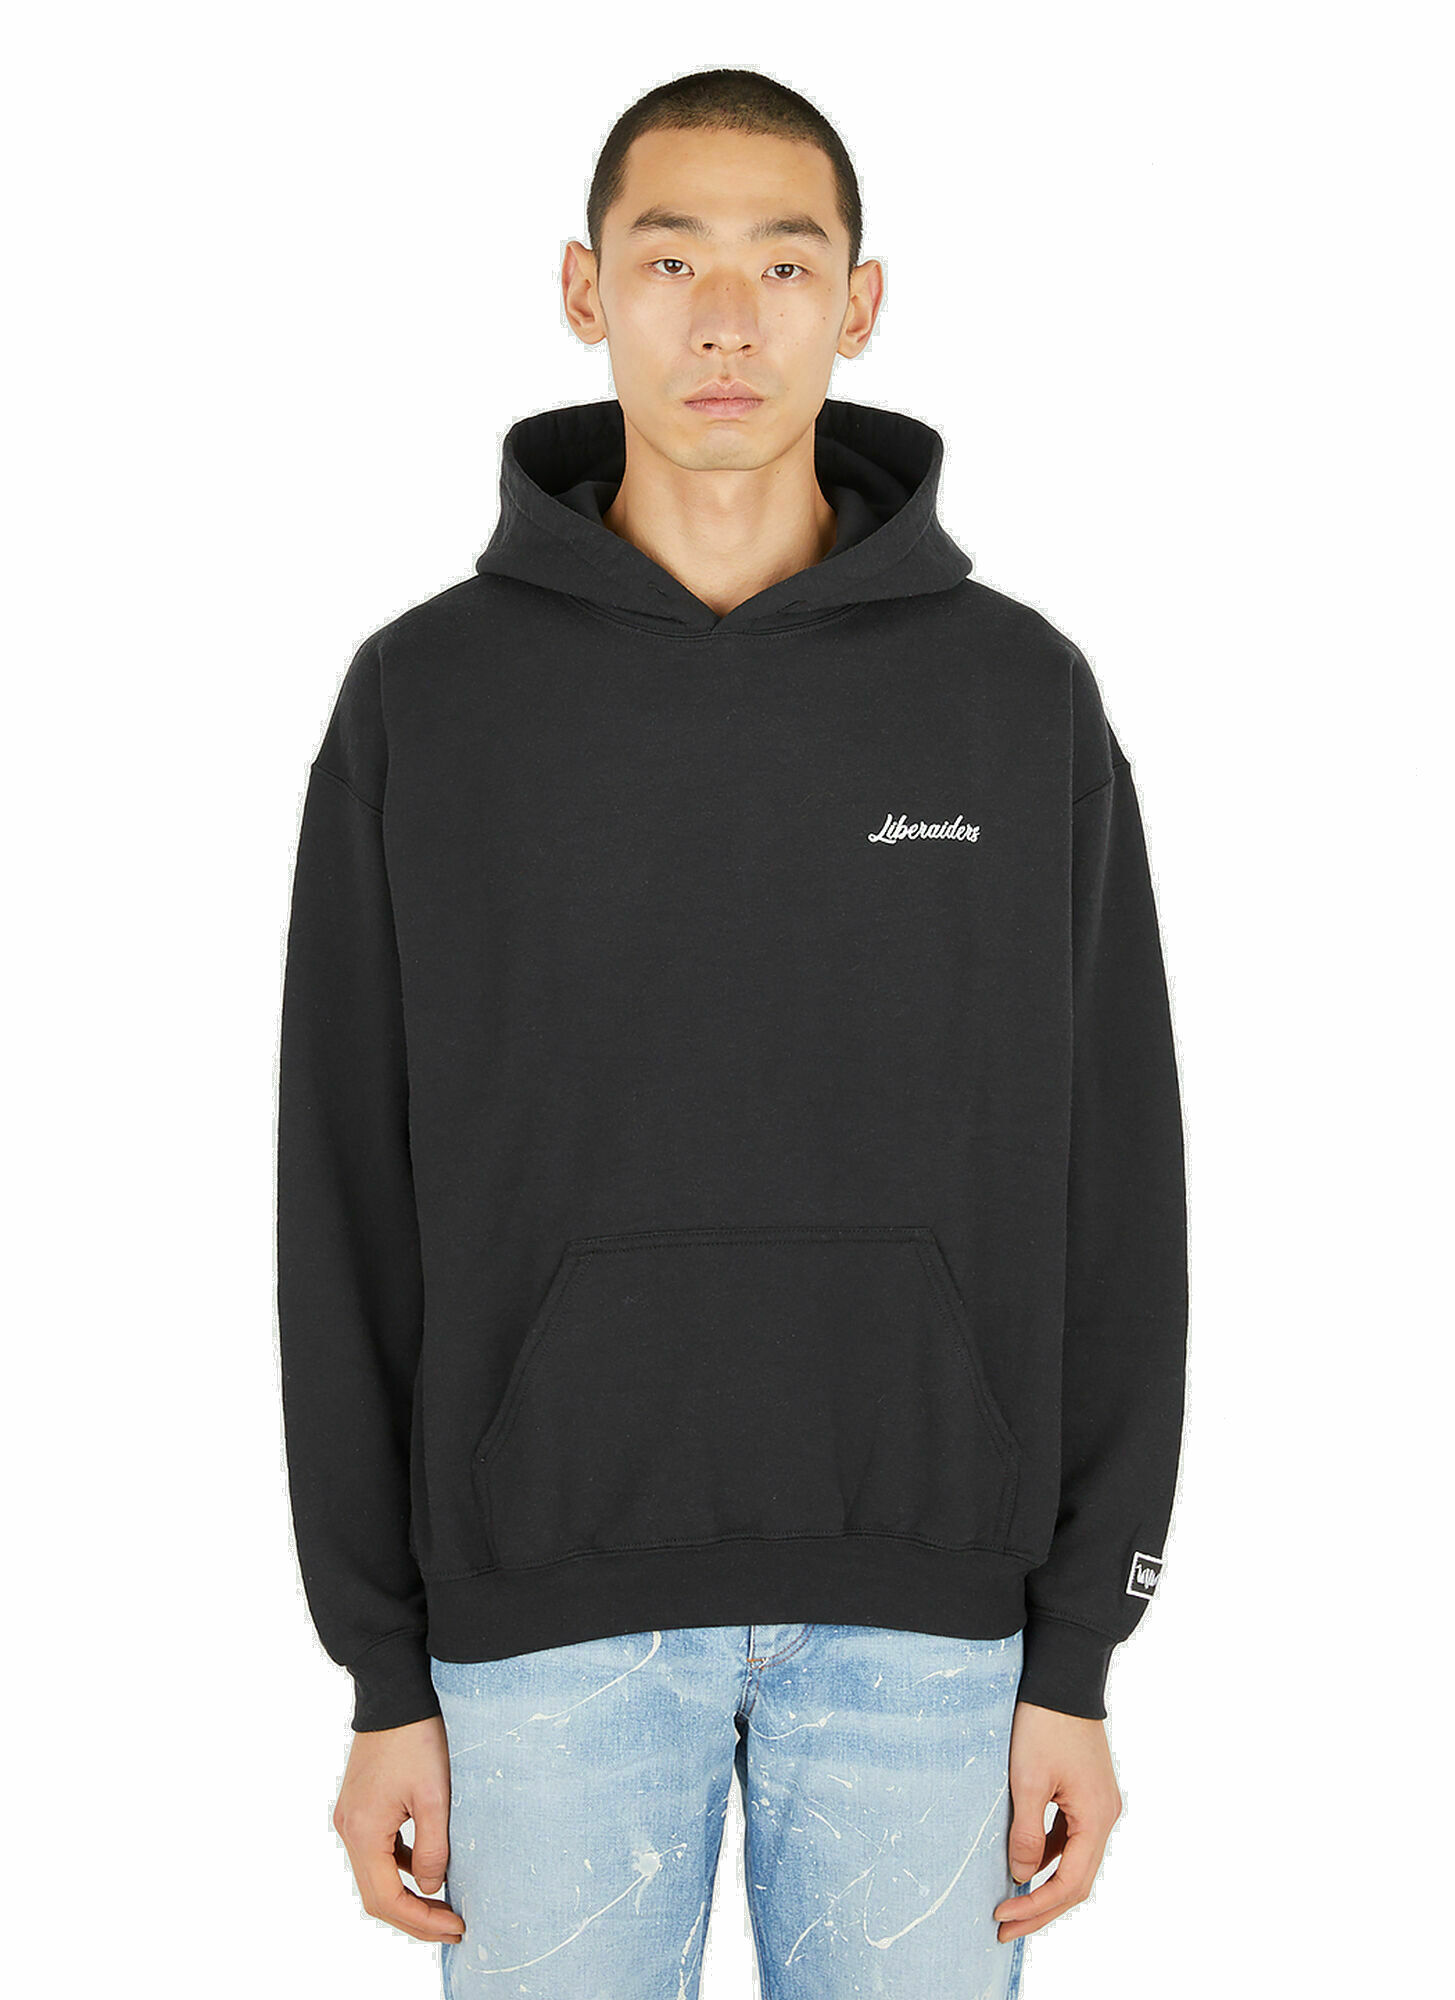 Attitude Hooded Sweatshirt in Black Liberaiders